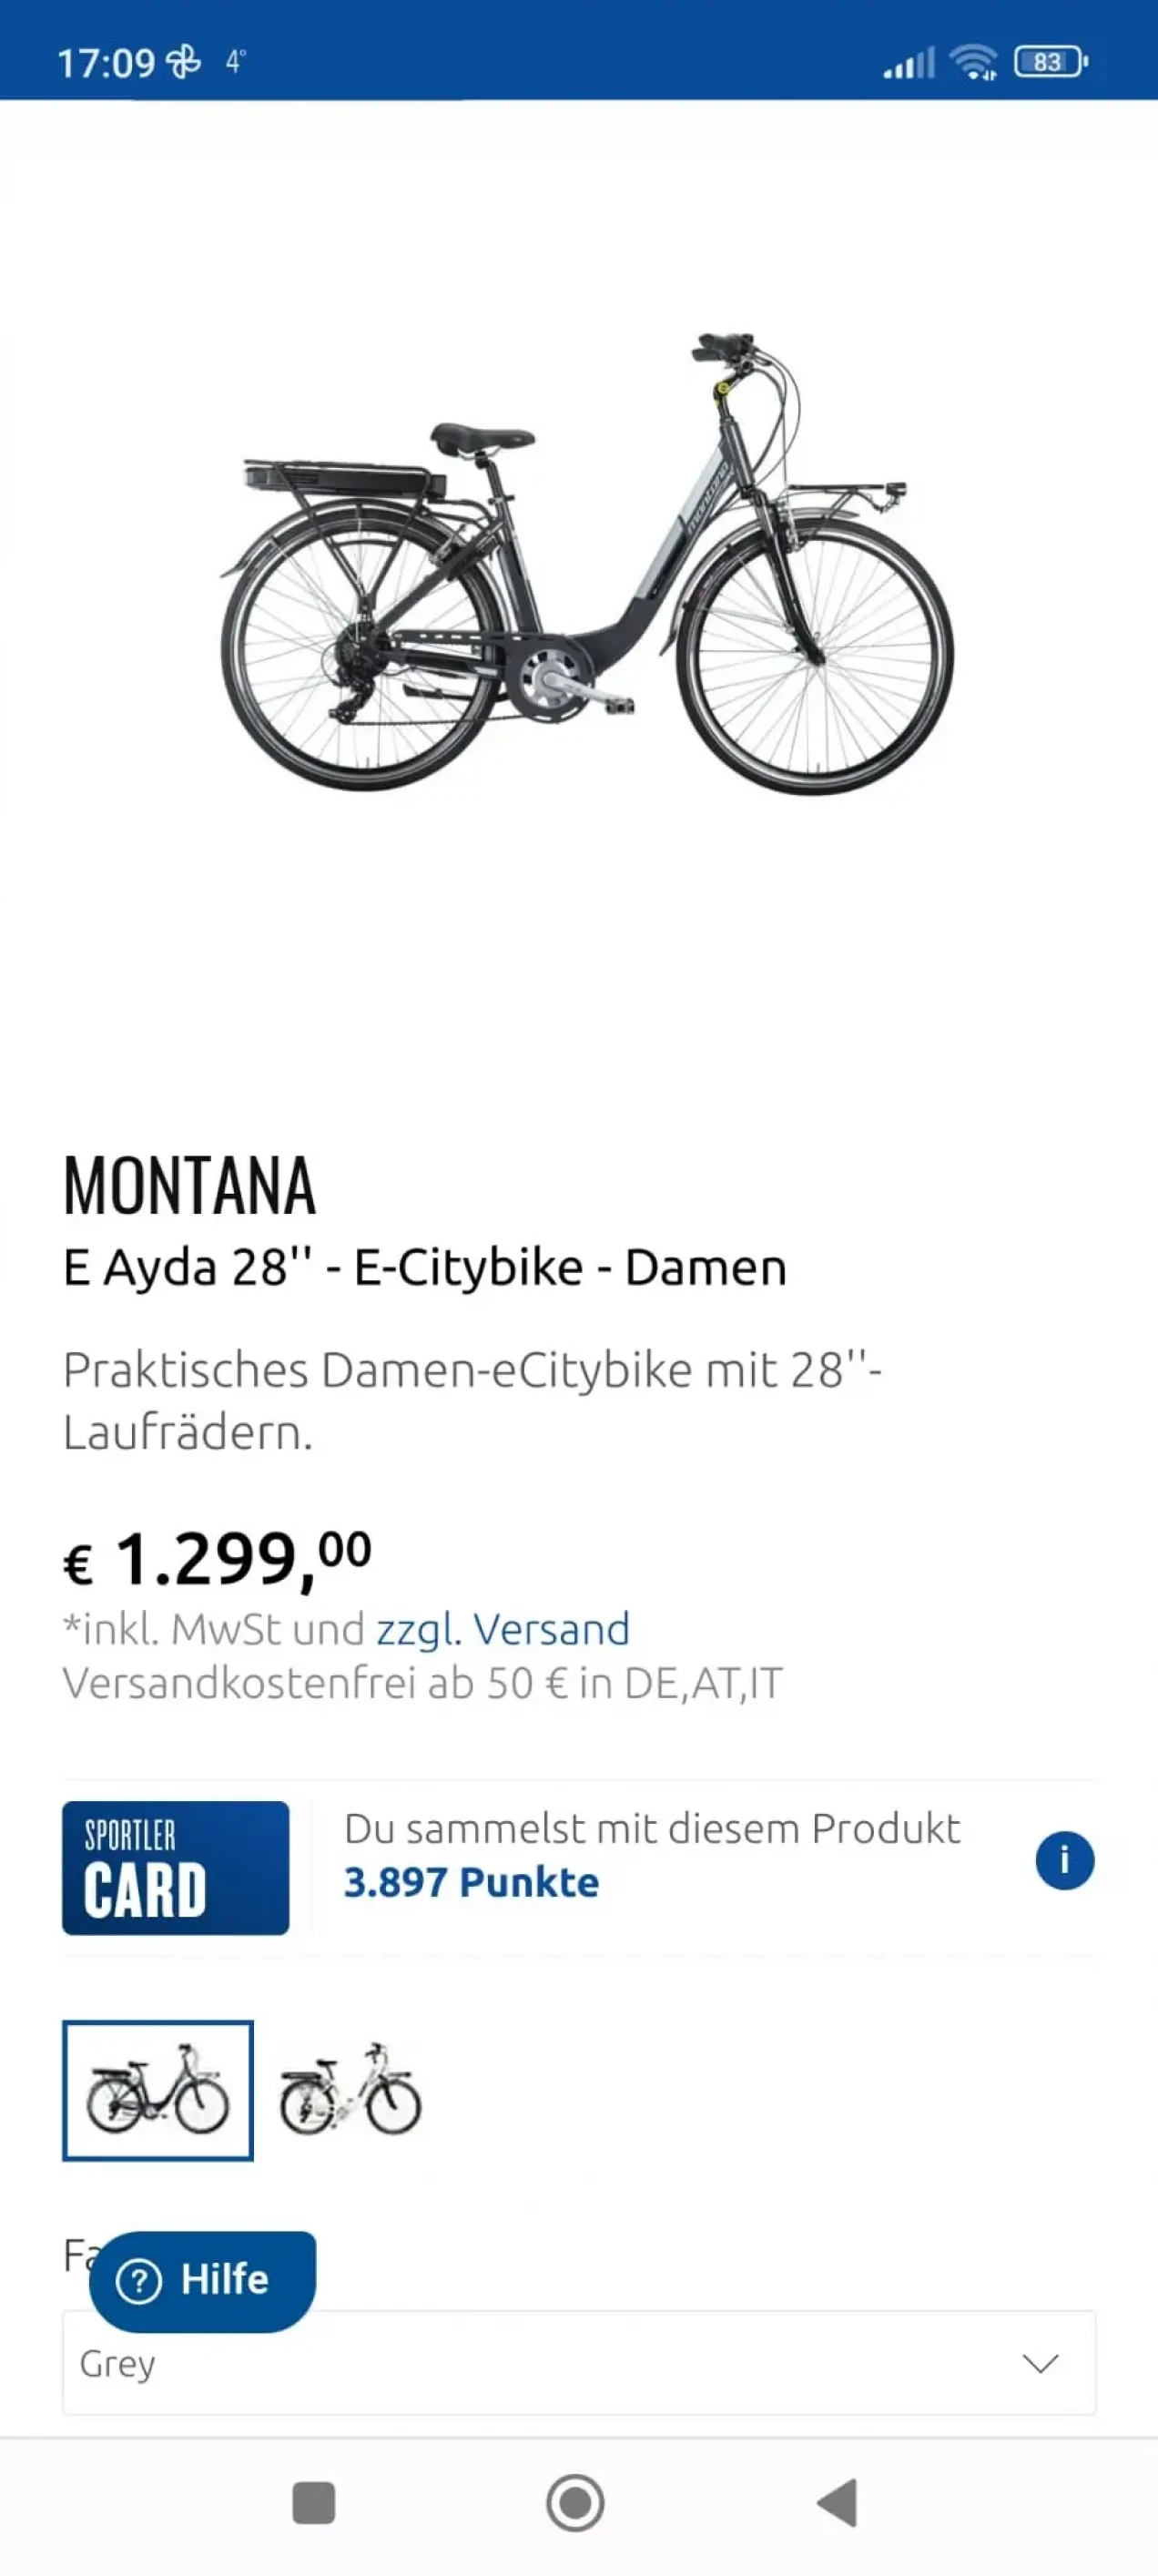 Montana Montana Ayda E- Citybike-Damen gebruikt in m buycycle